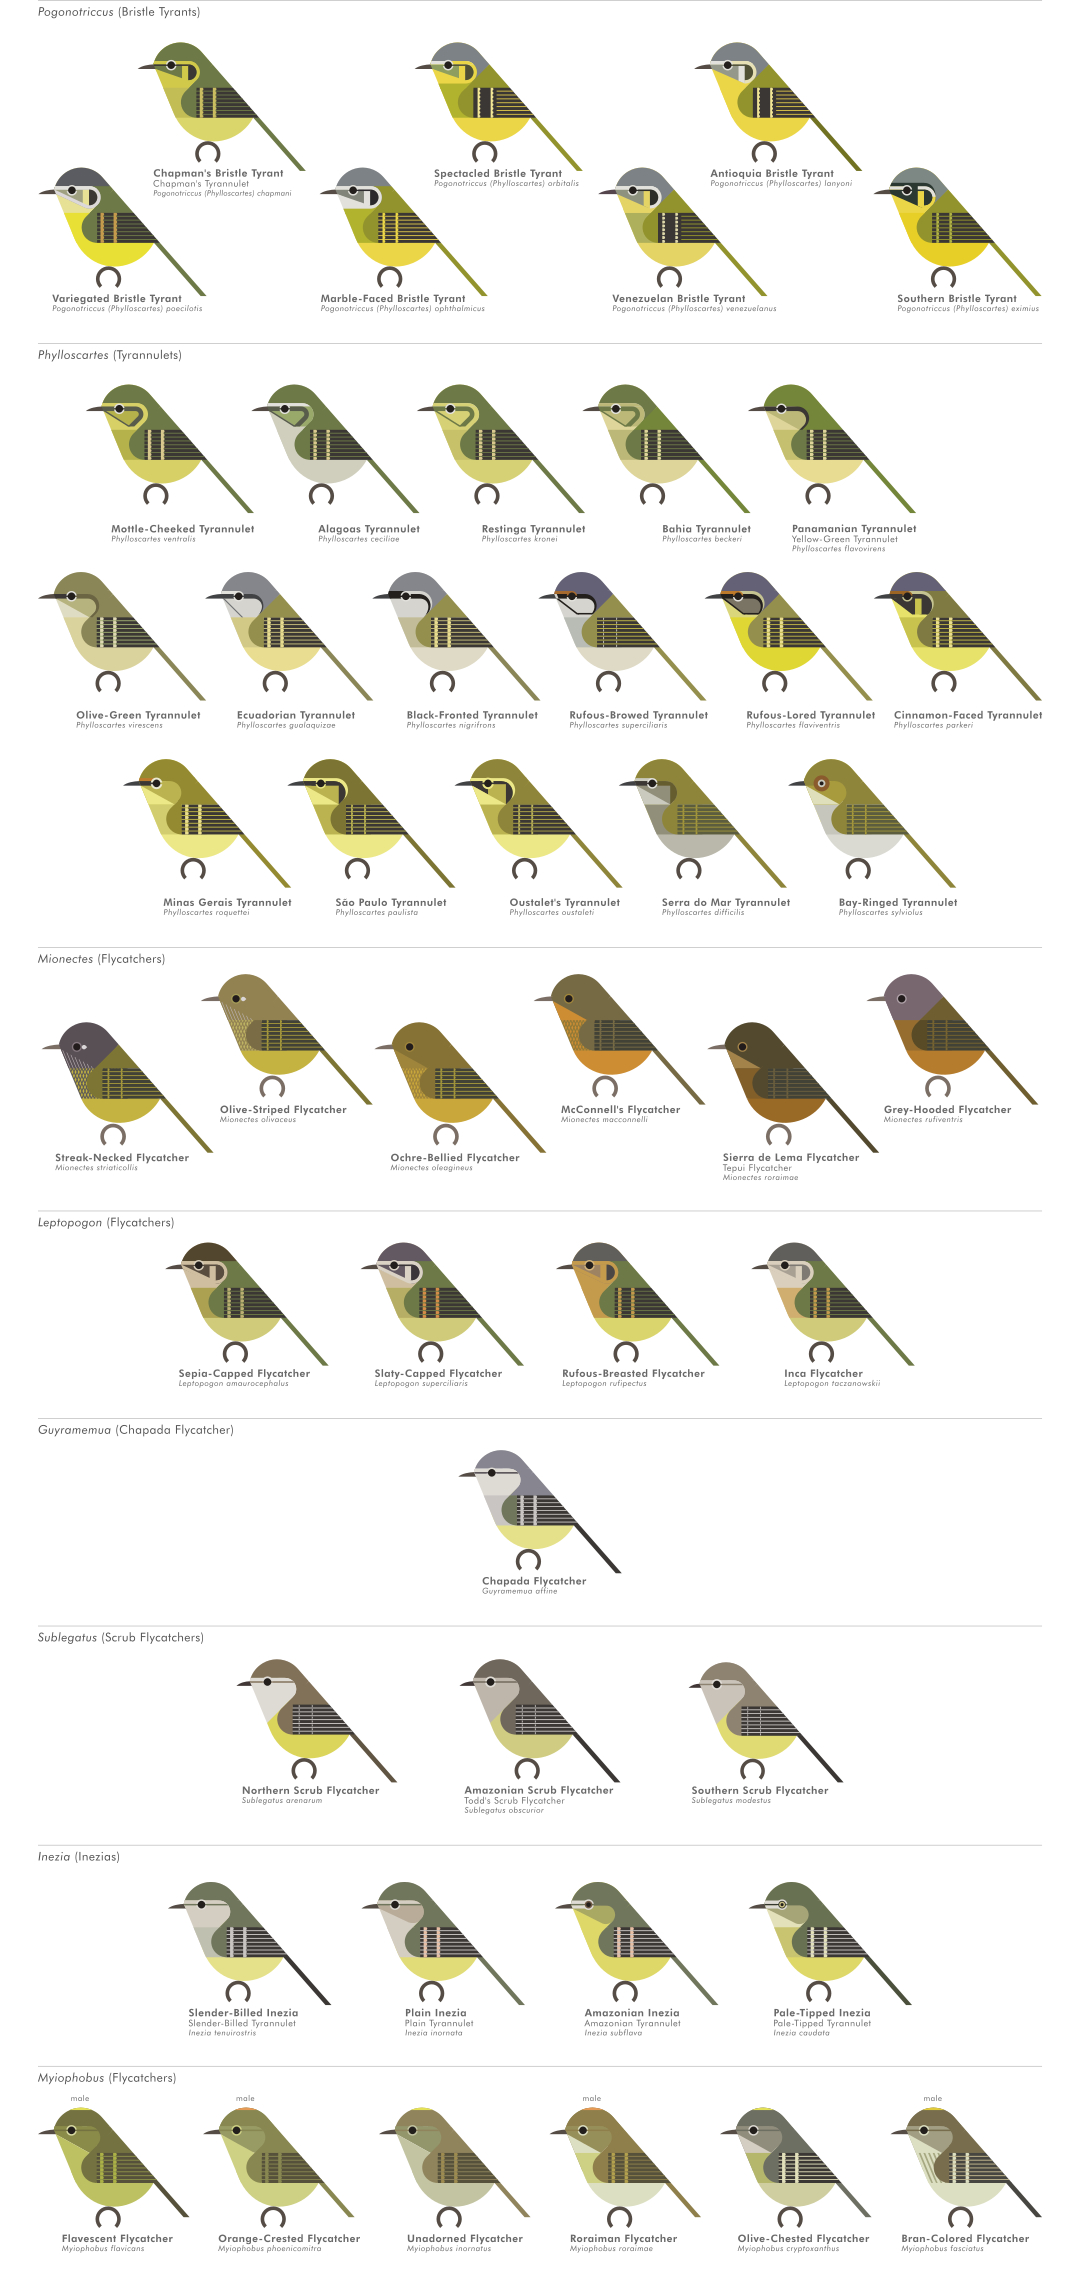 scott partridge - AVE - avian vector encyclopedia - new world flycatchers - bird vector art